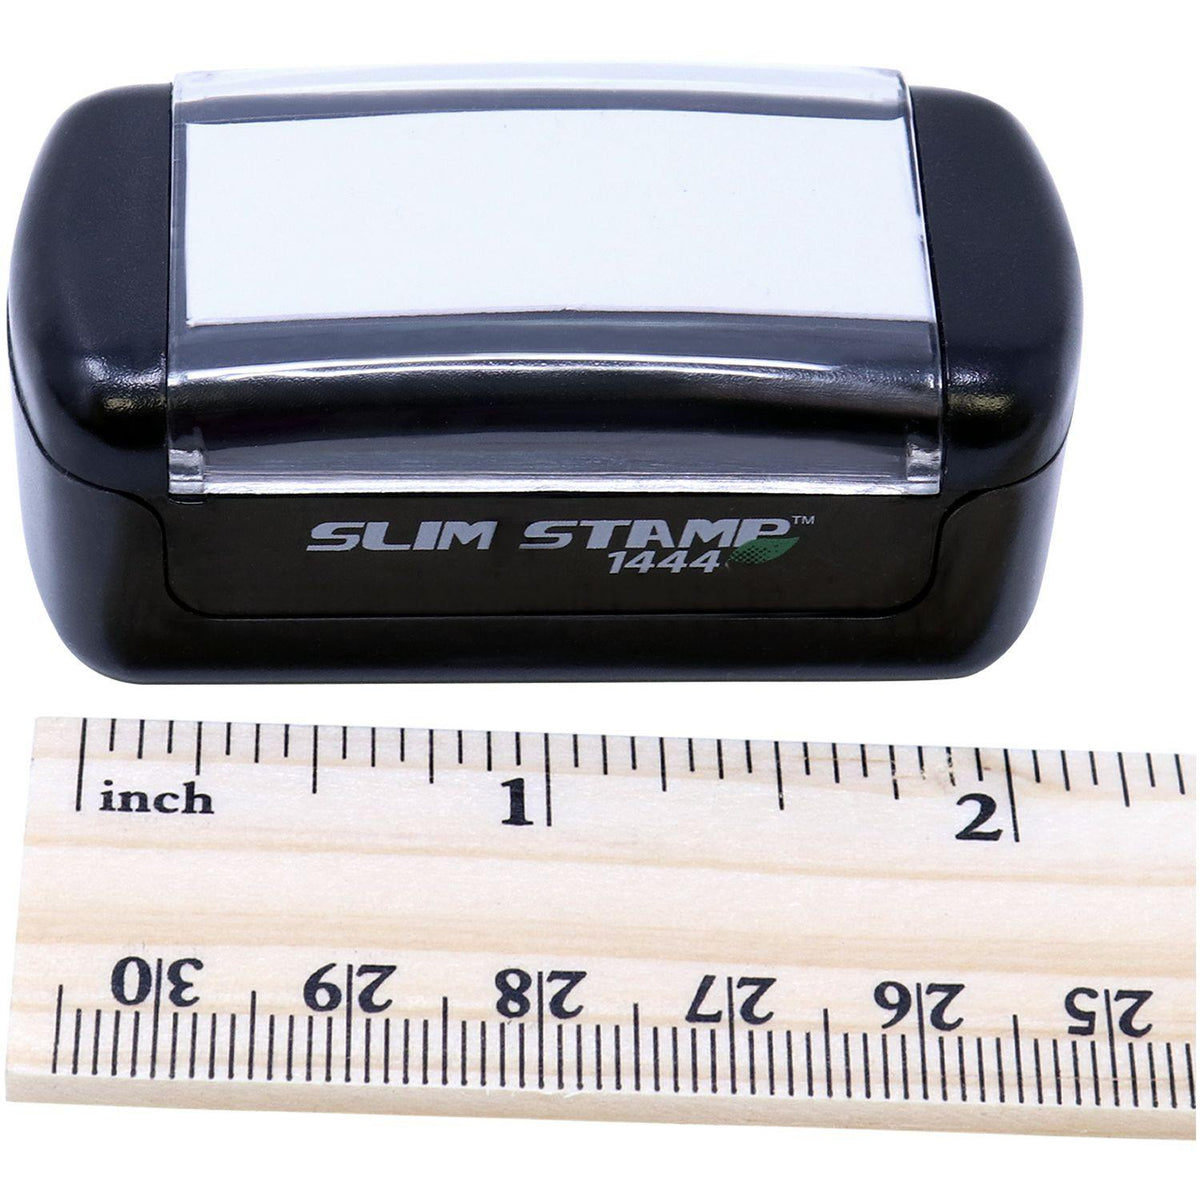 Measurement Slim Pre Inked Great Progress Stamp with Ruler